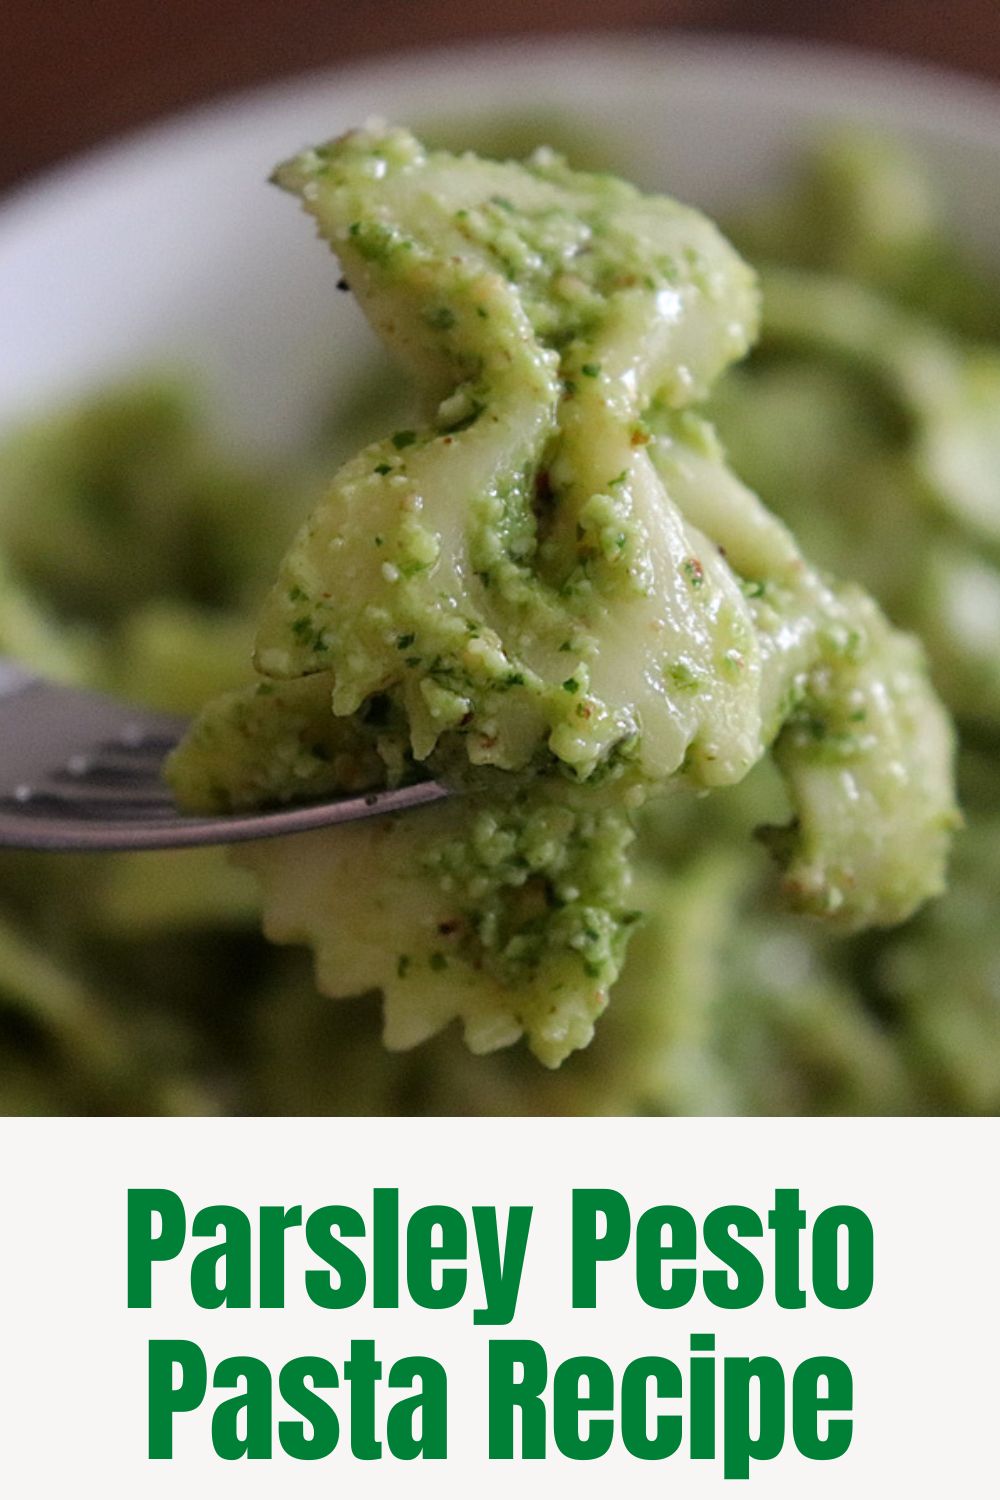 PIn for Easy Parsley Pesto Pasta Recipe